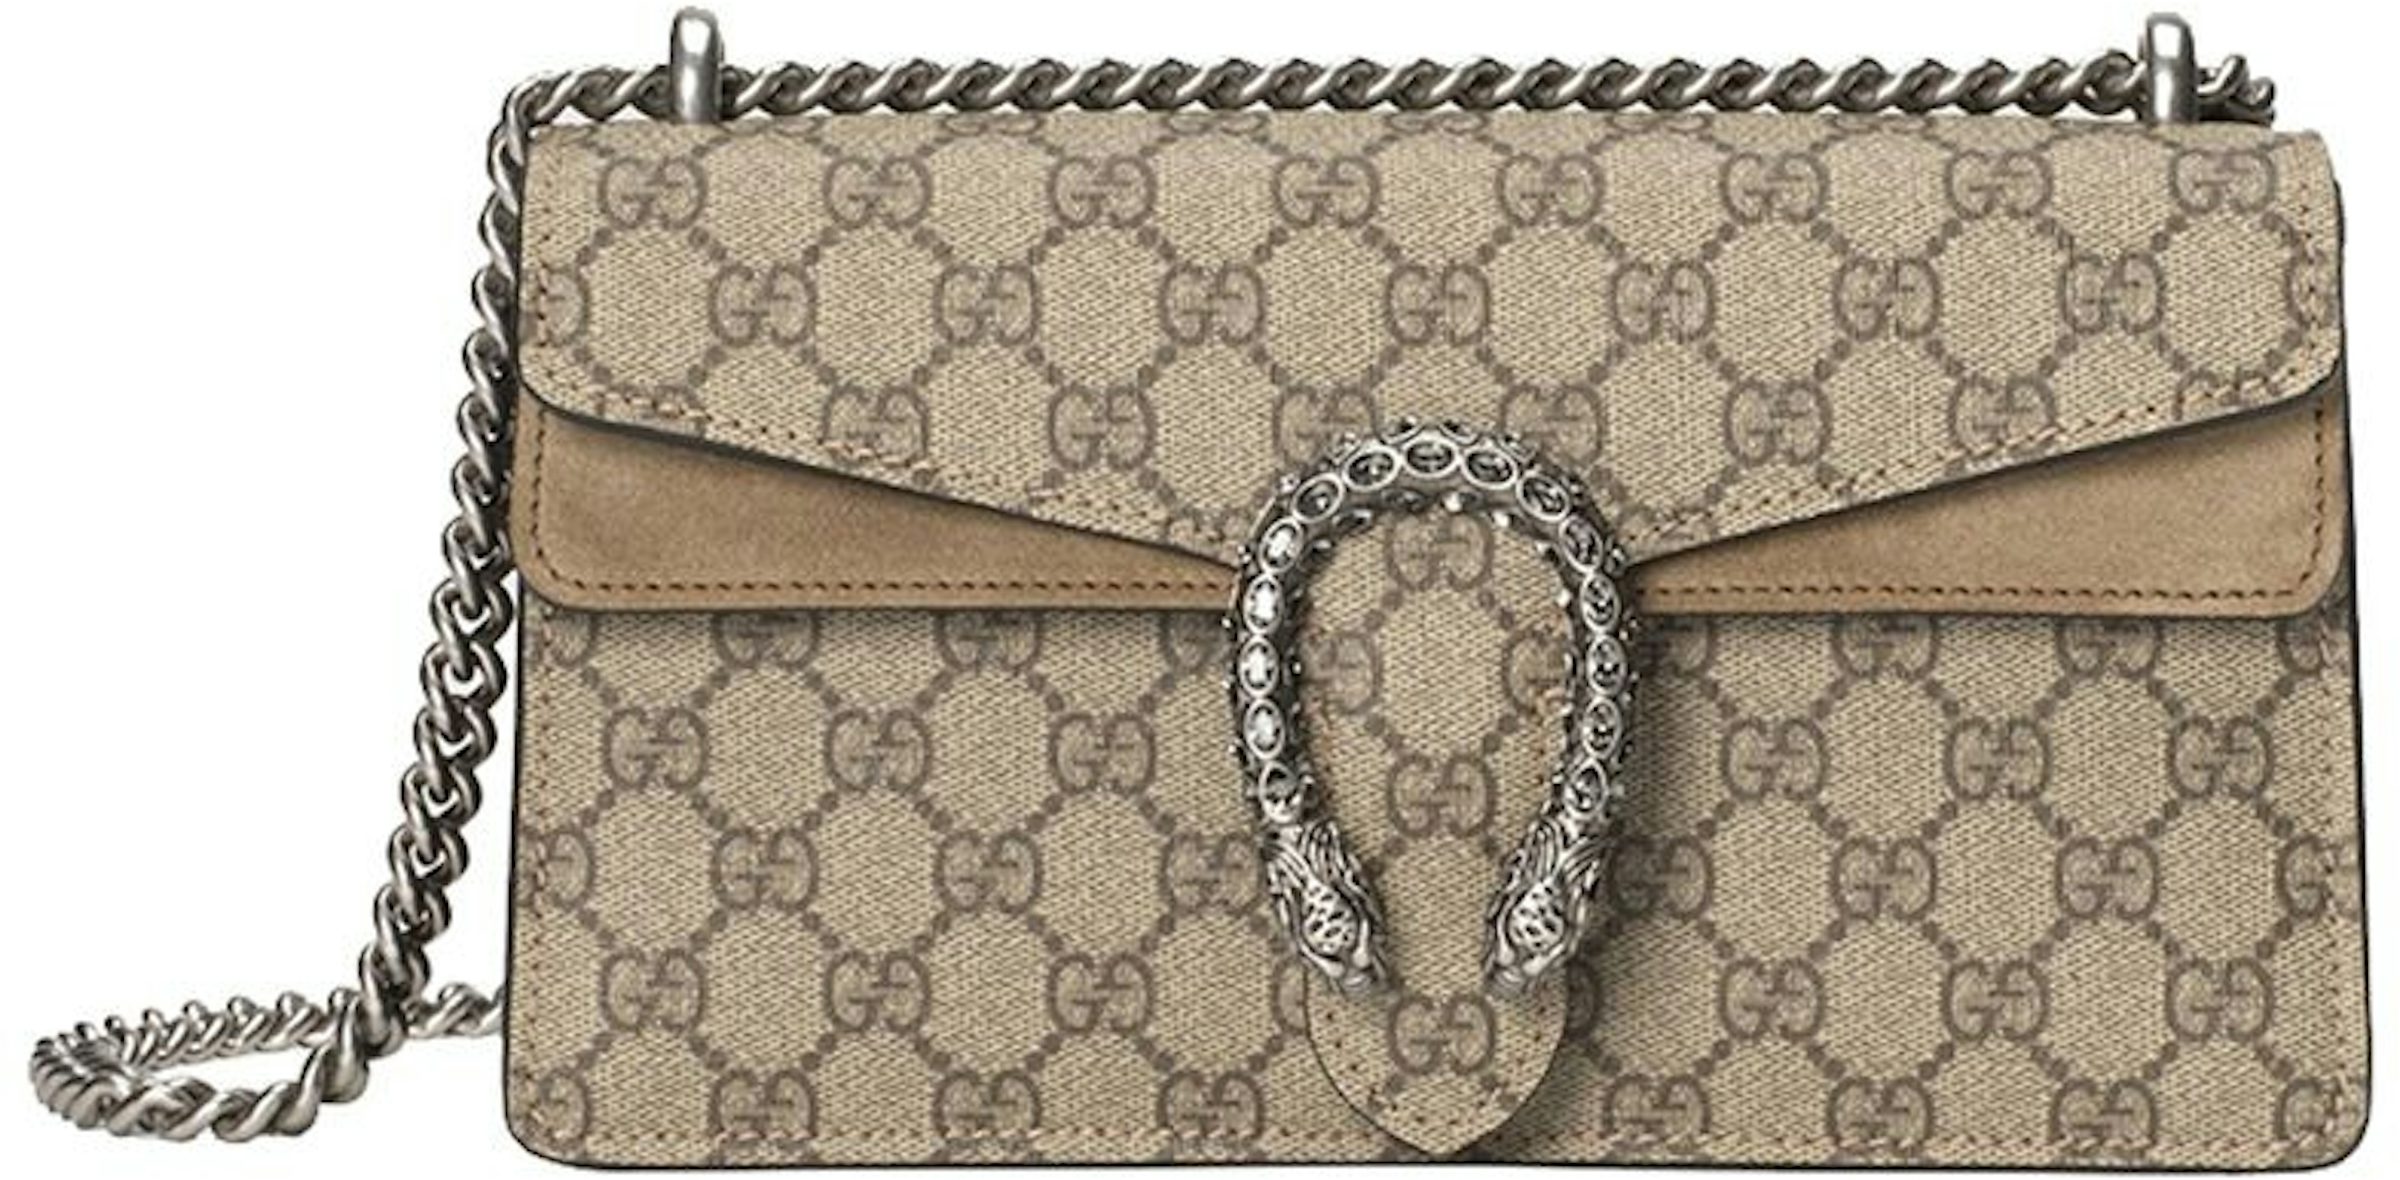 Dionysus GG Supreme Small Shoulder Bag in Beige - Gucci